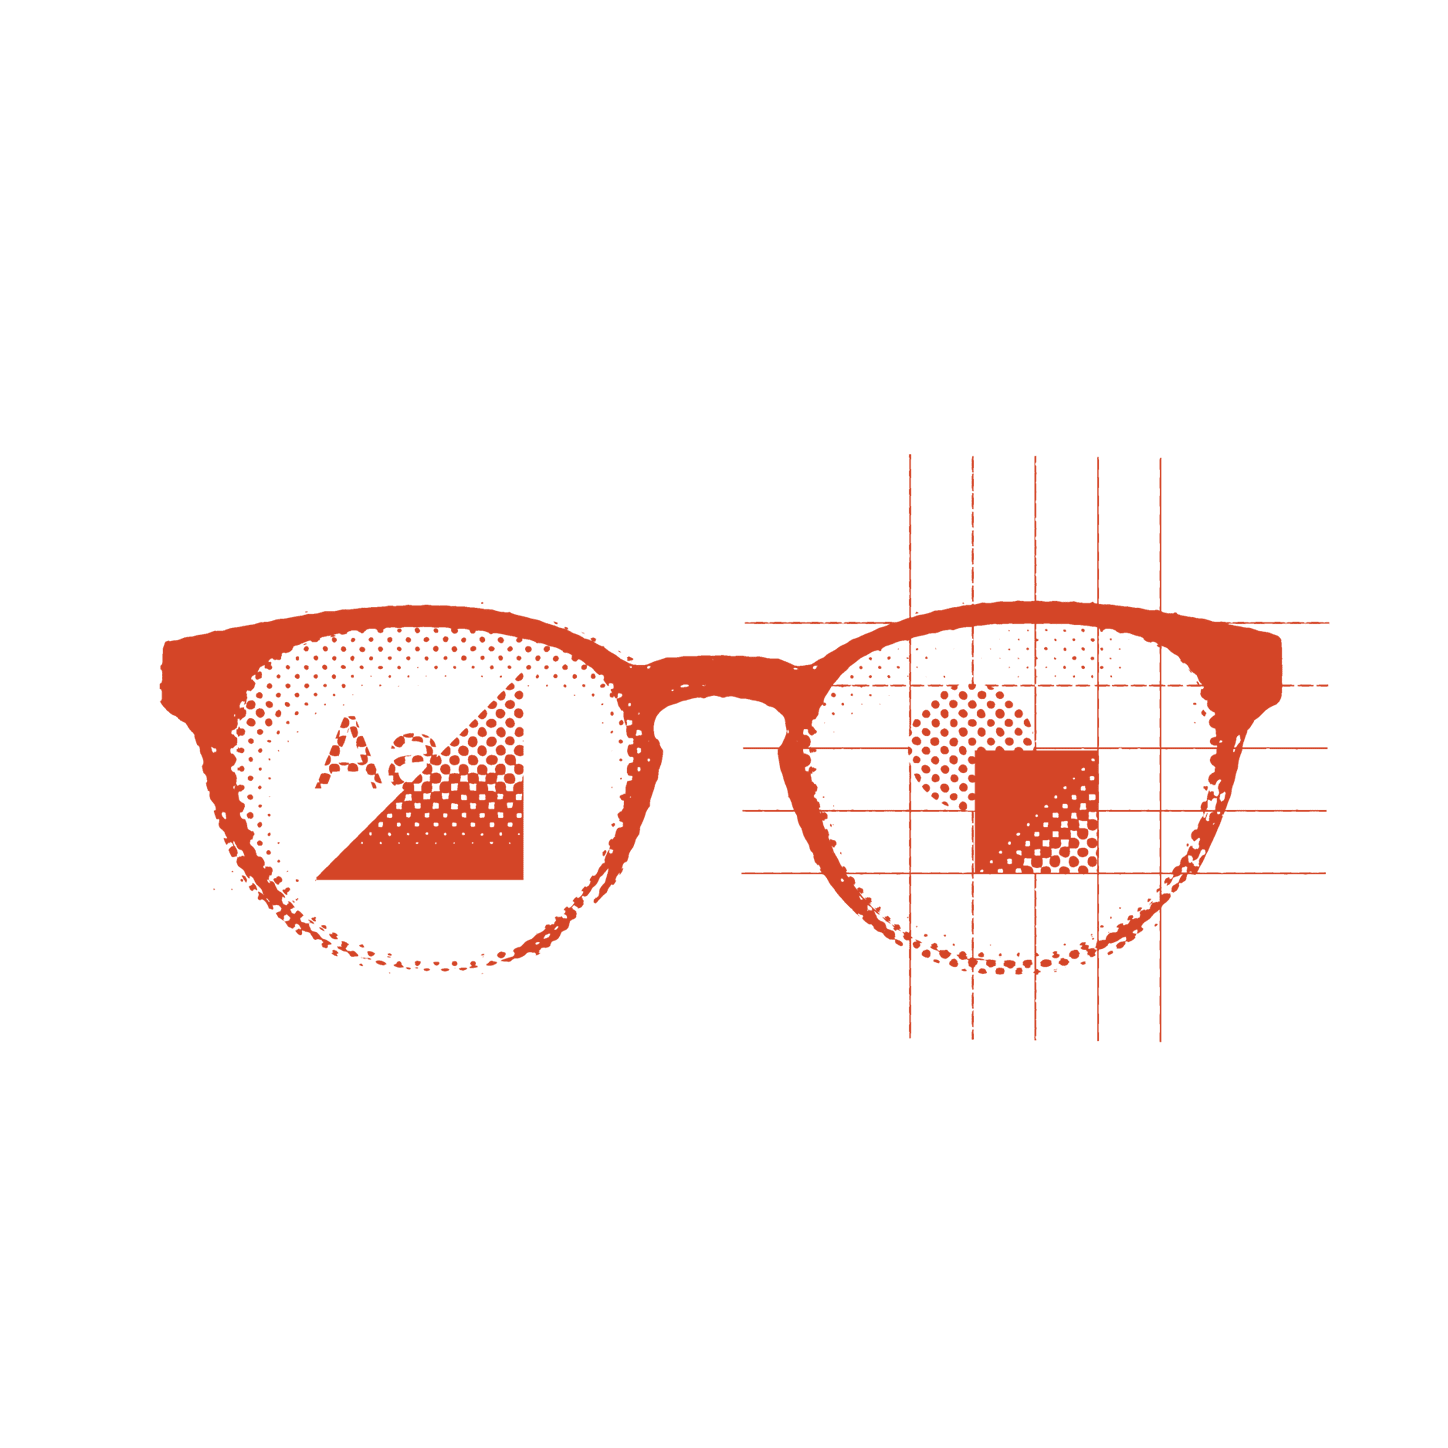 Glasses containing design elements